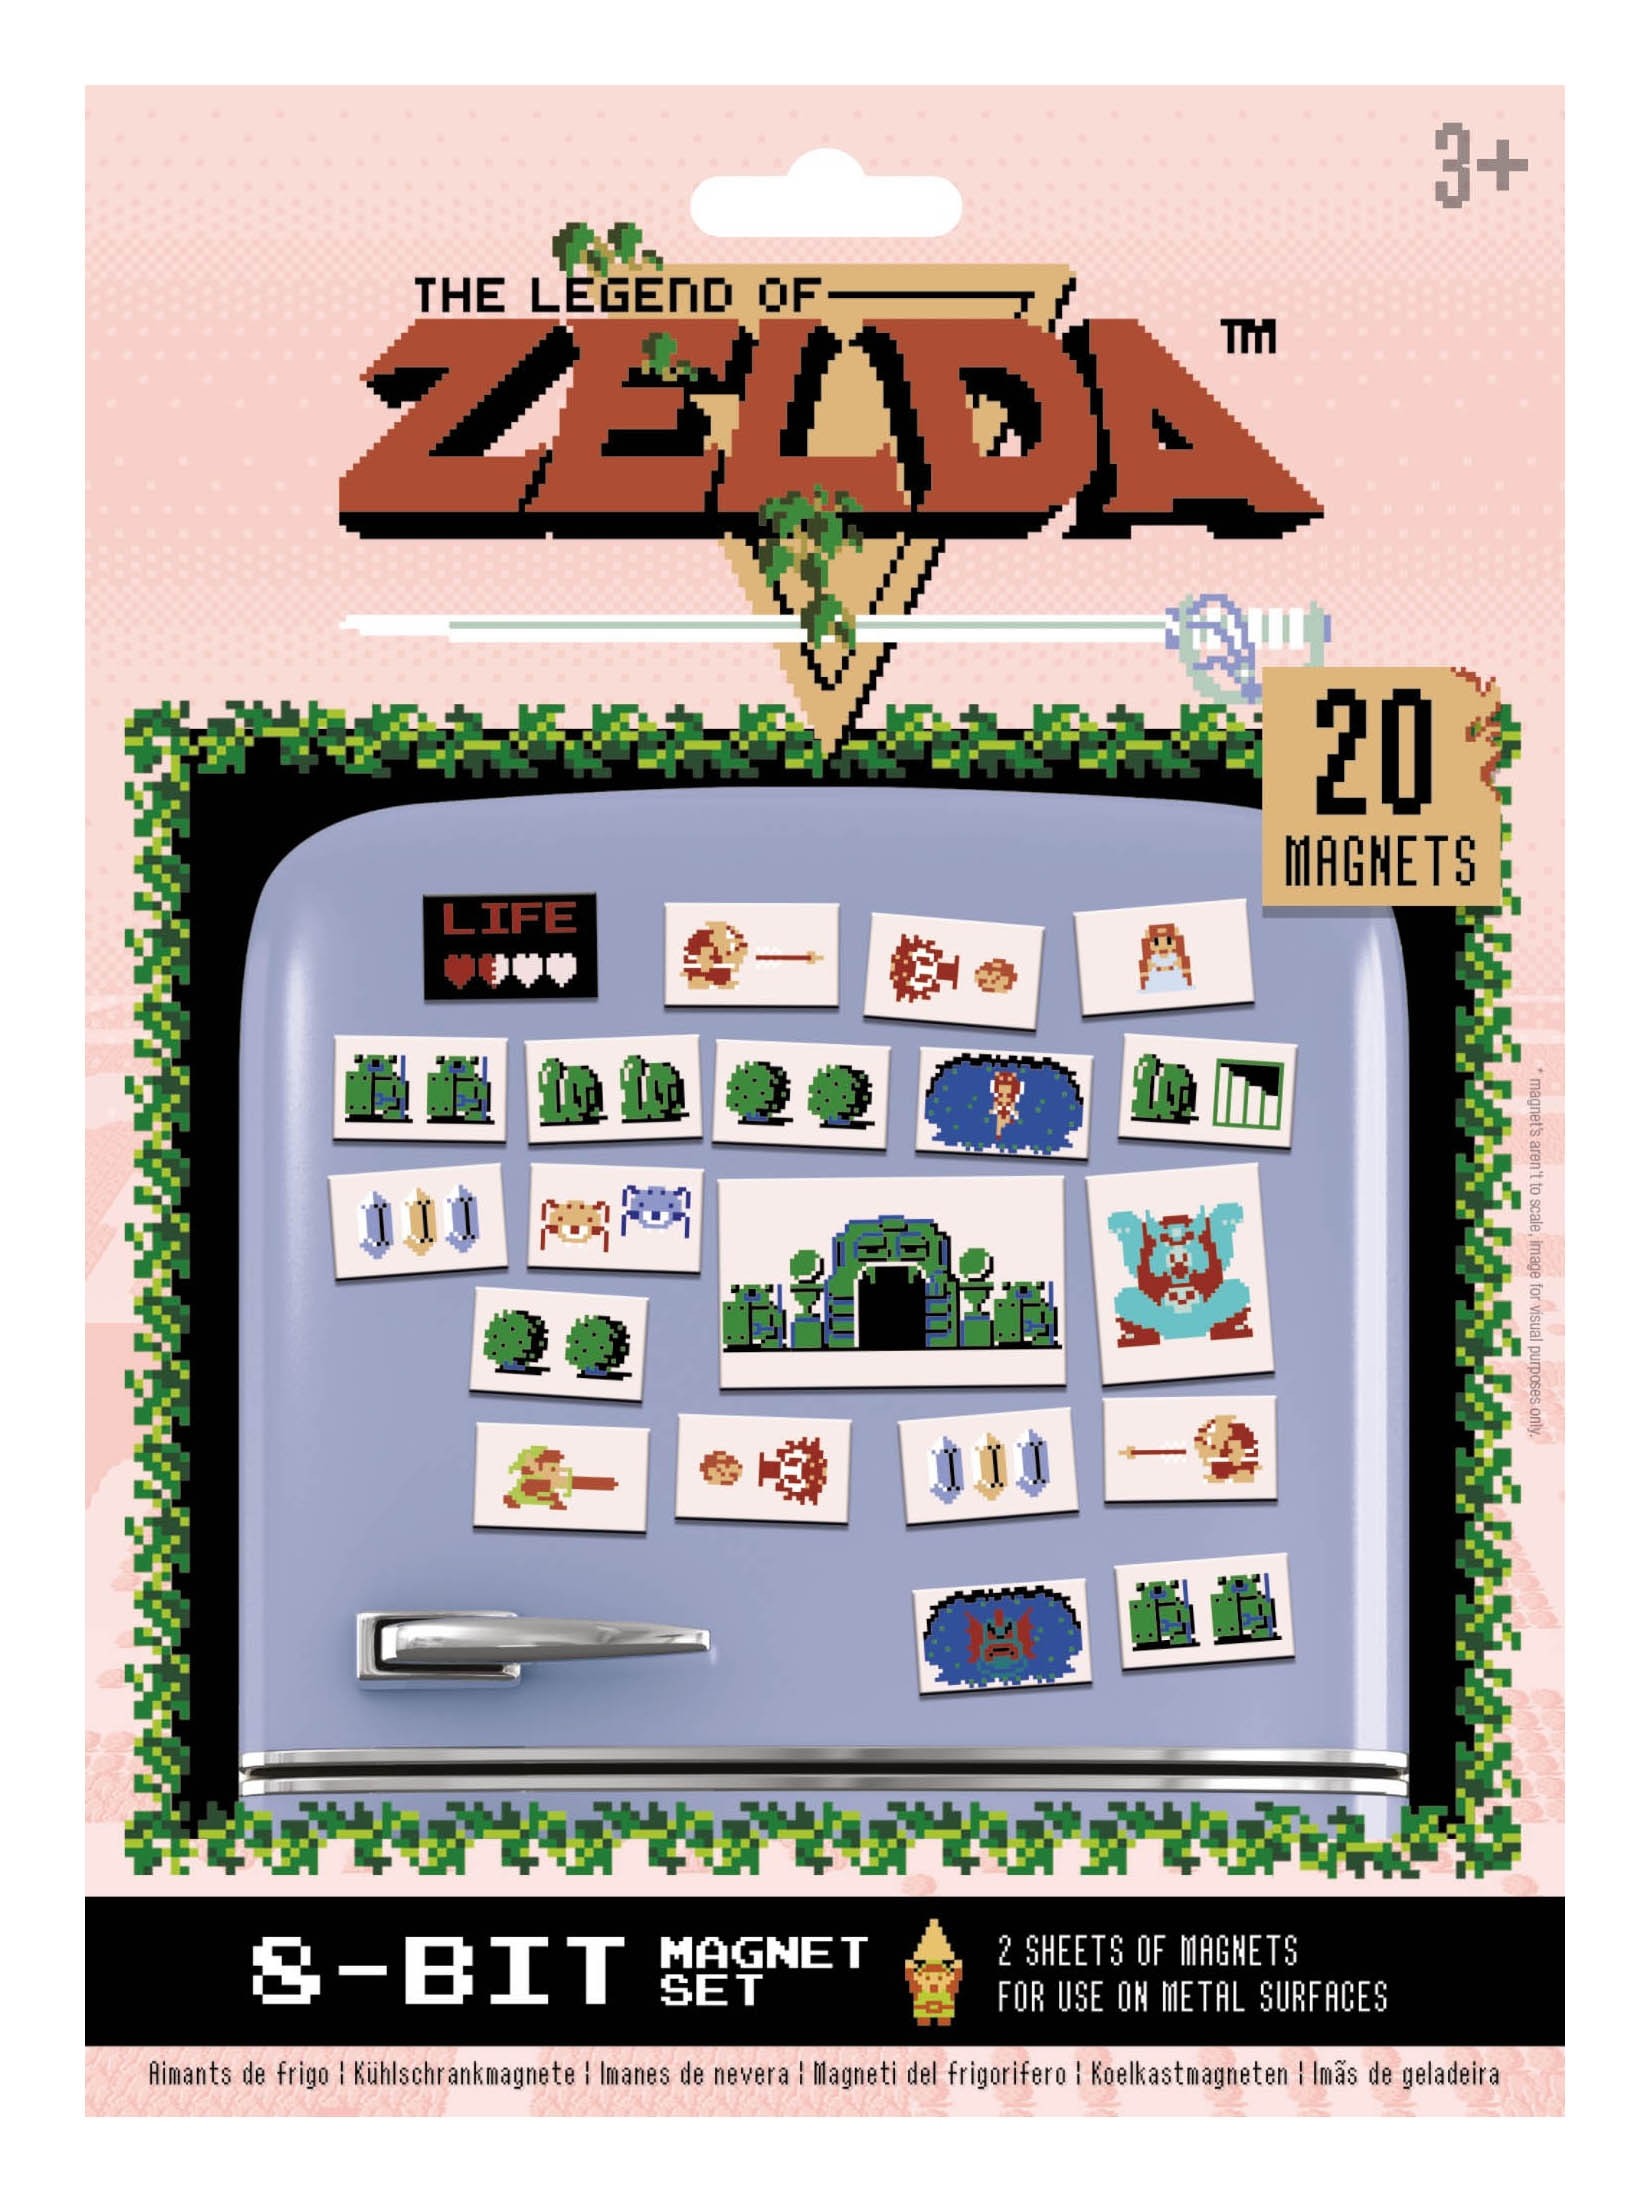 The Legend of Zelda (Retro) Magnet Set